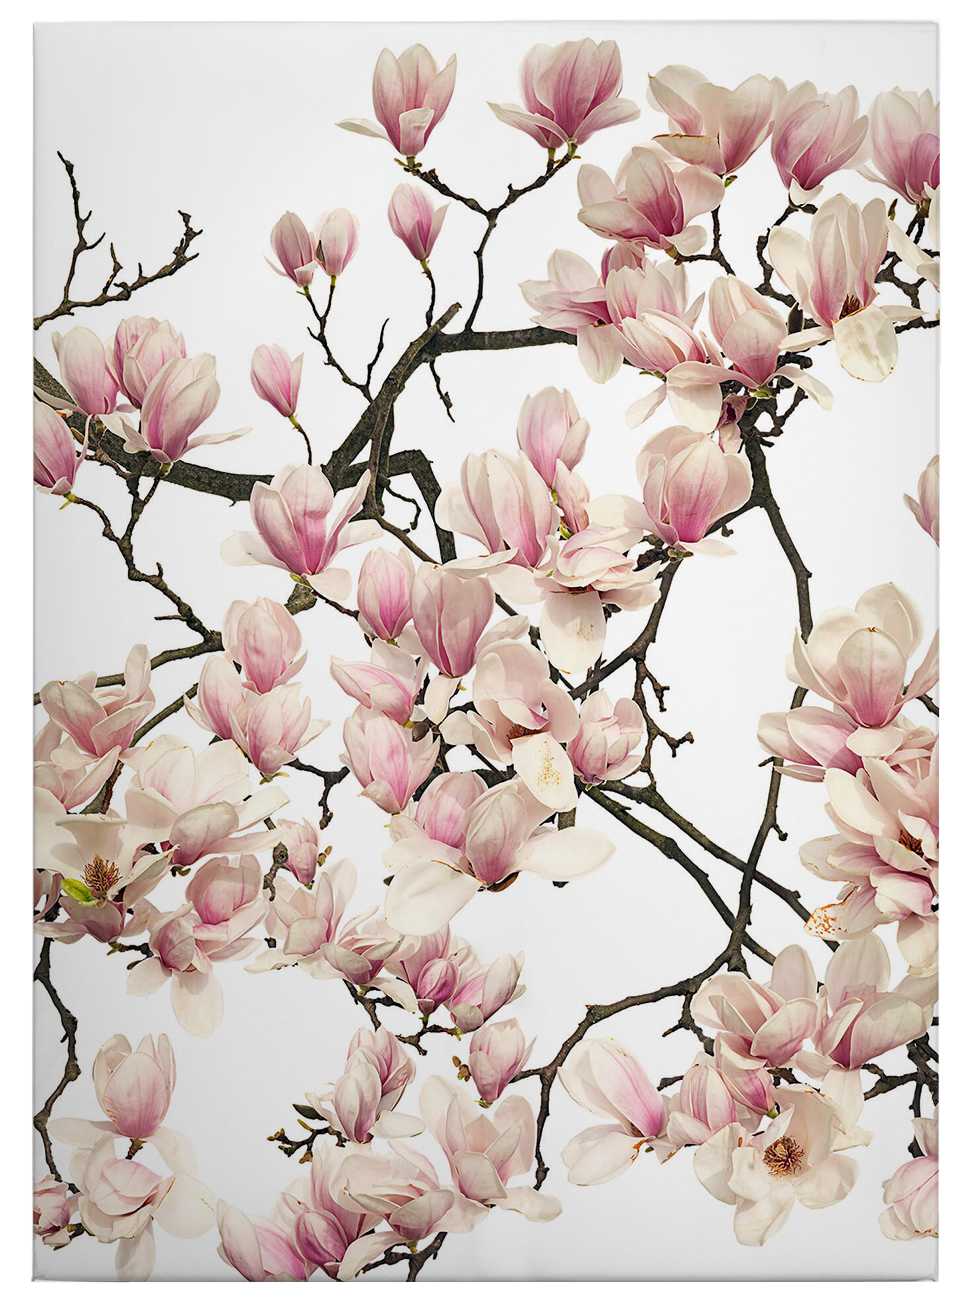             Cuadro en lienzo Kadam Cerezo en flor en primavera - 0,50 m x 0,70 m
        